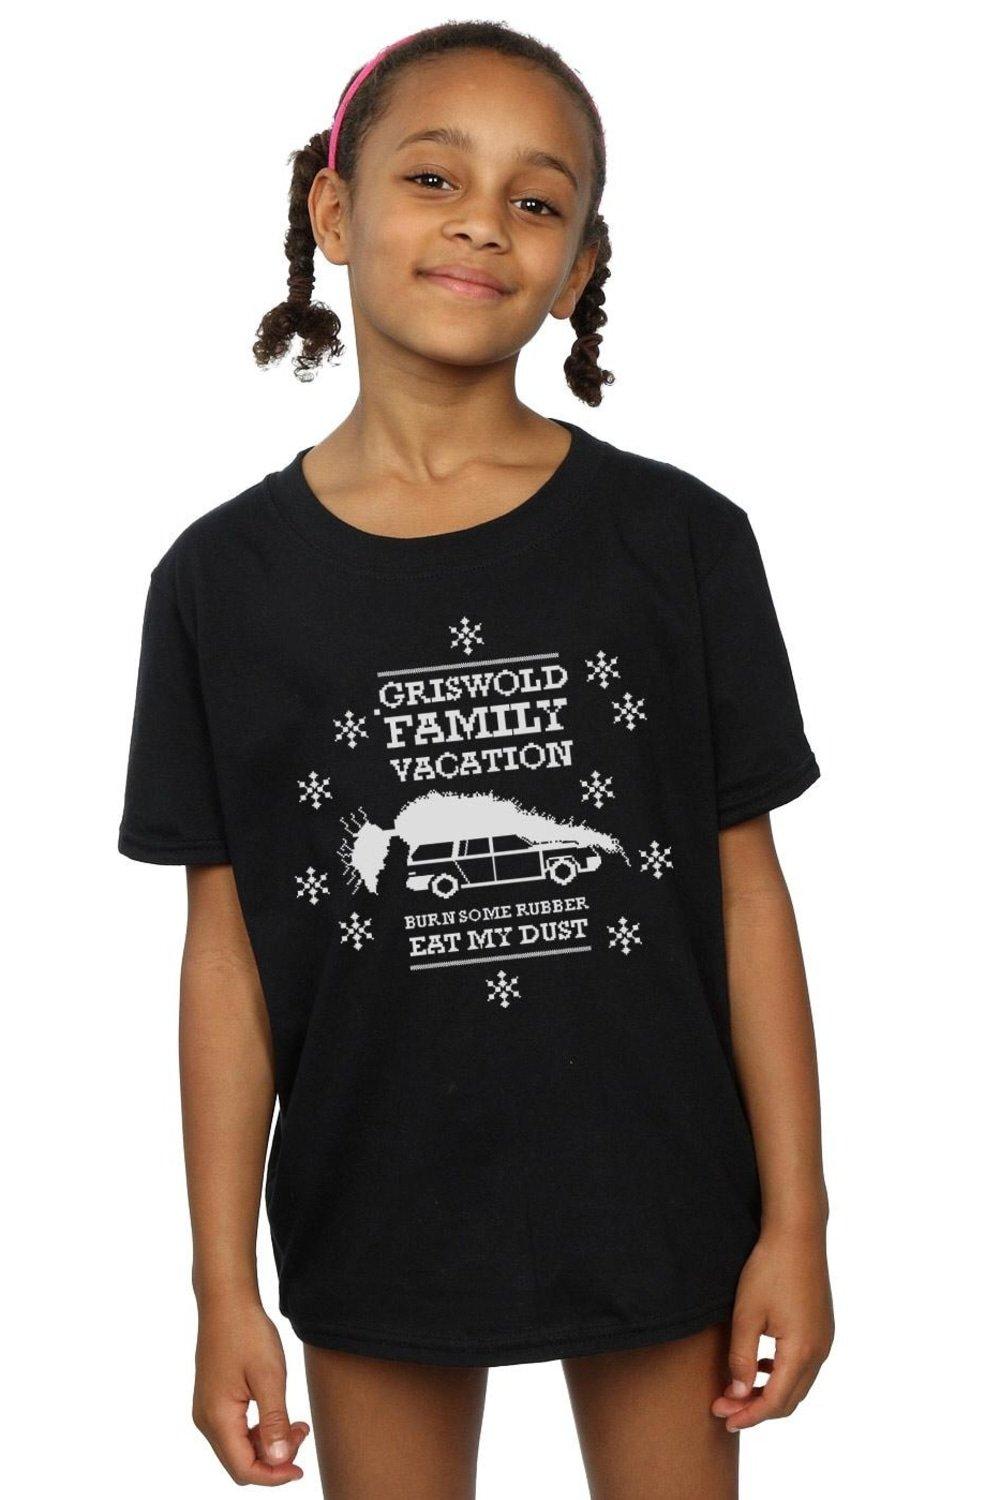 Хлопковая футболка Eat My Dust National Lampoon's Christmas Vacation, черный